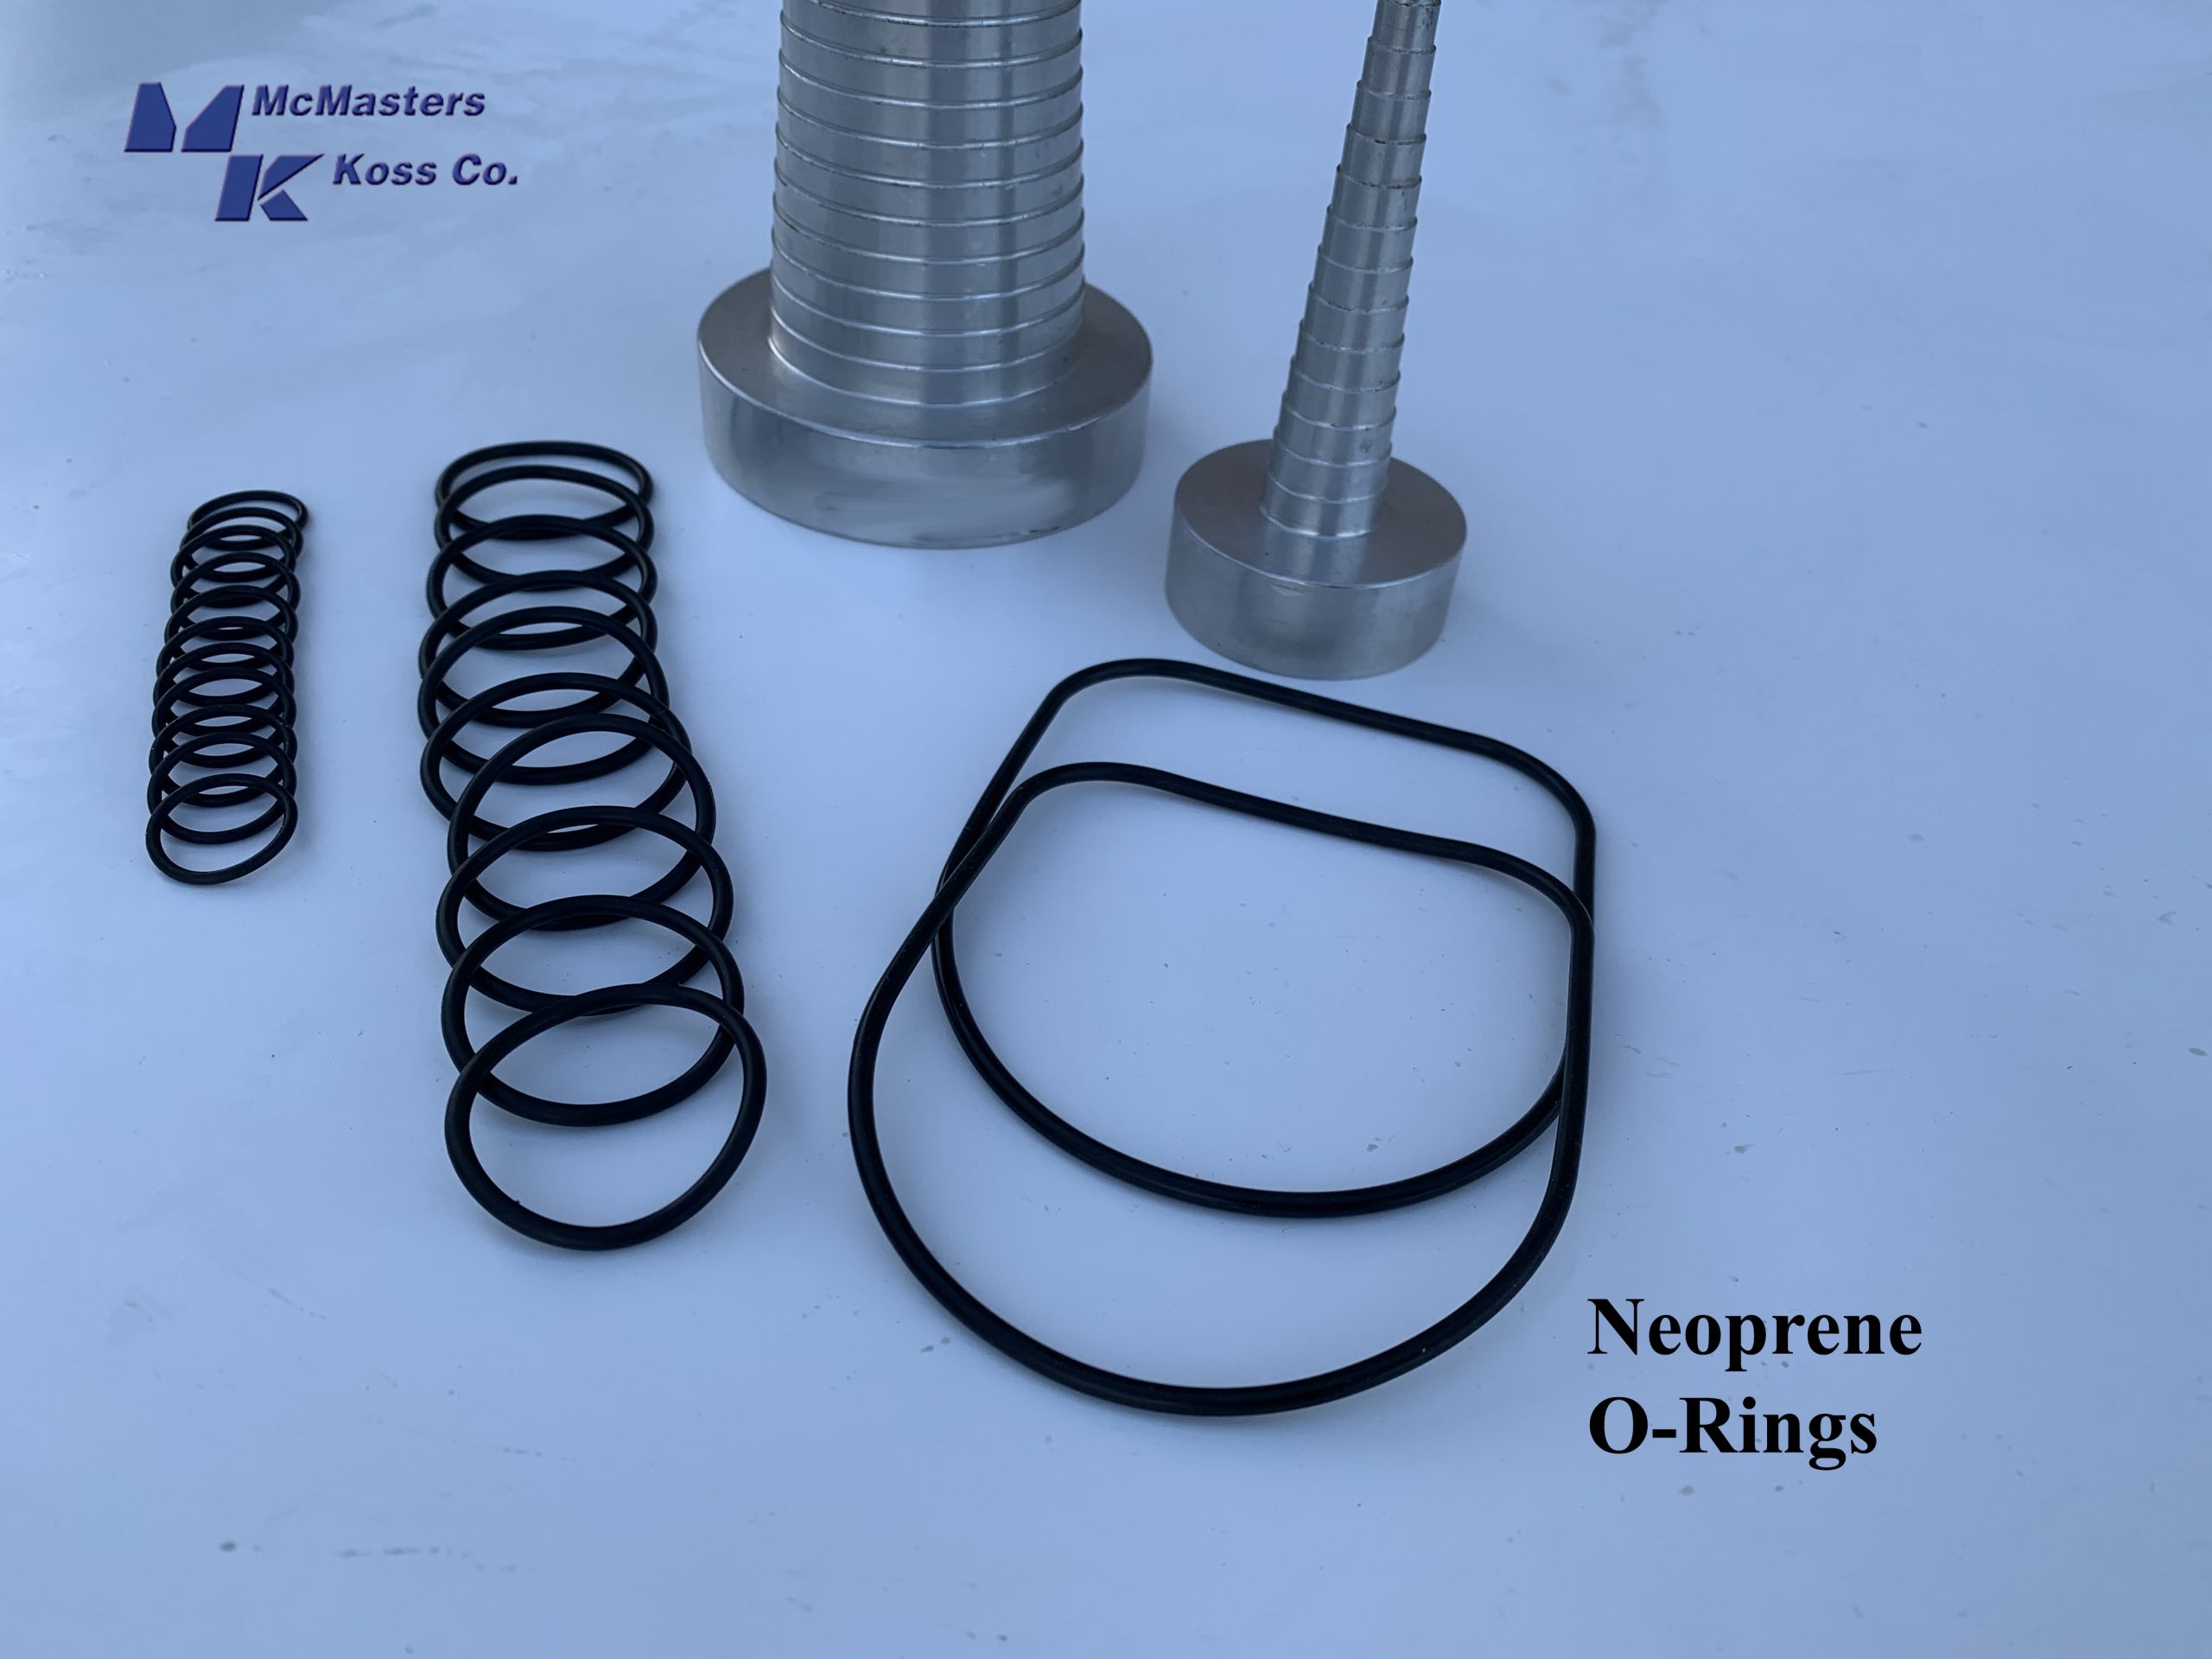 Neoprene O-Rings and Seals